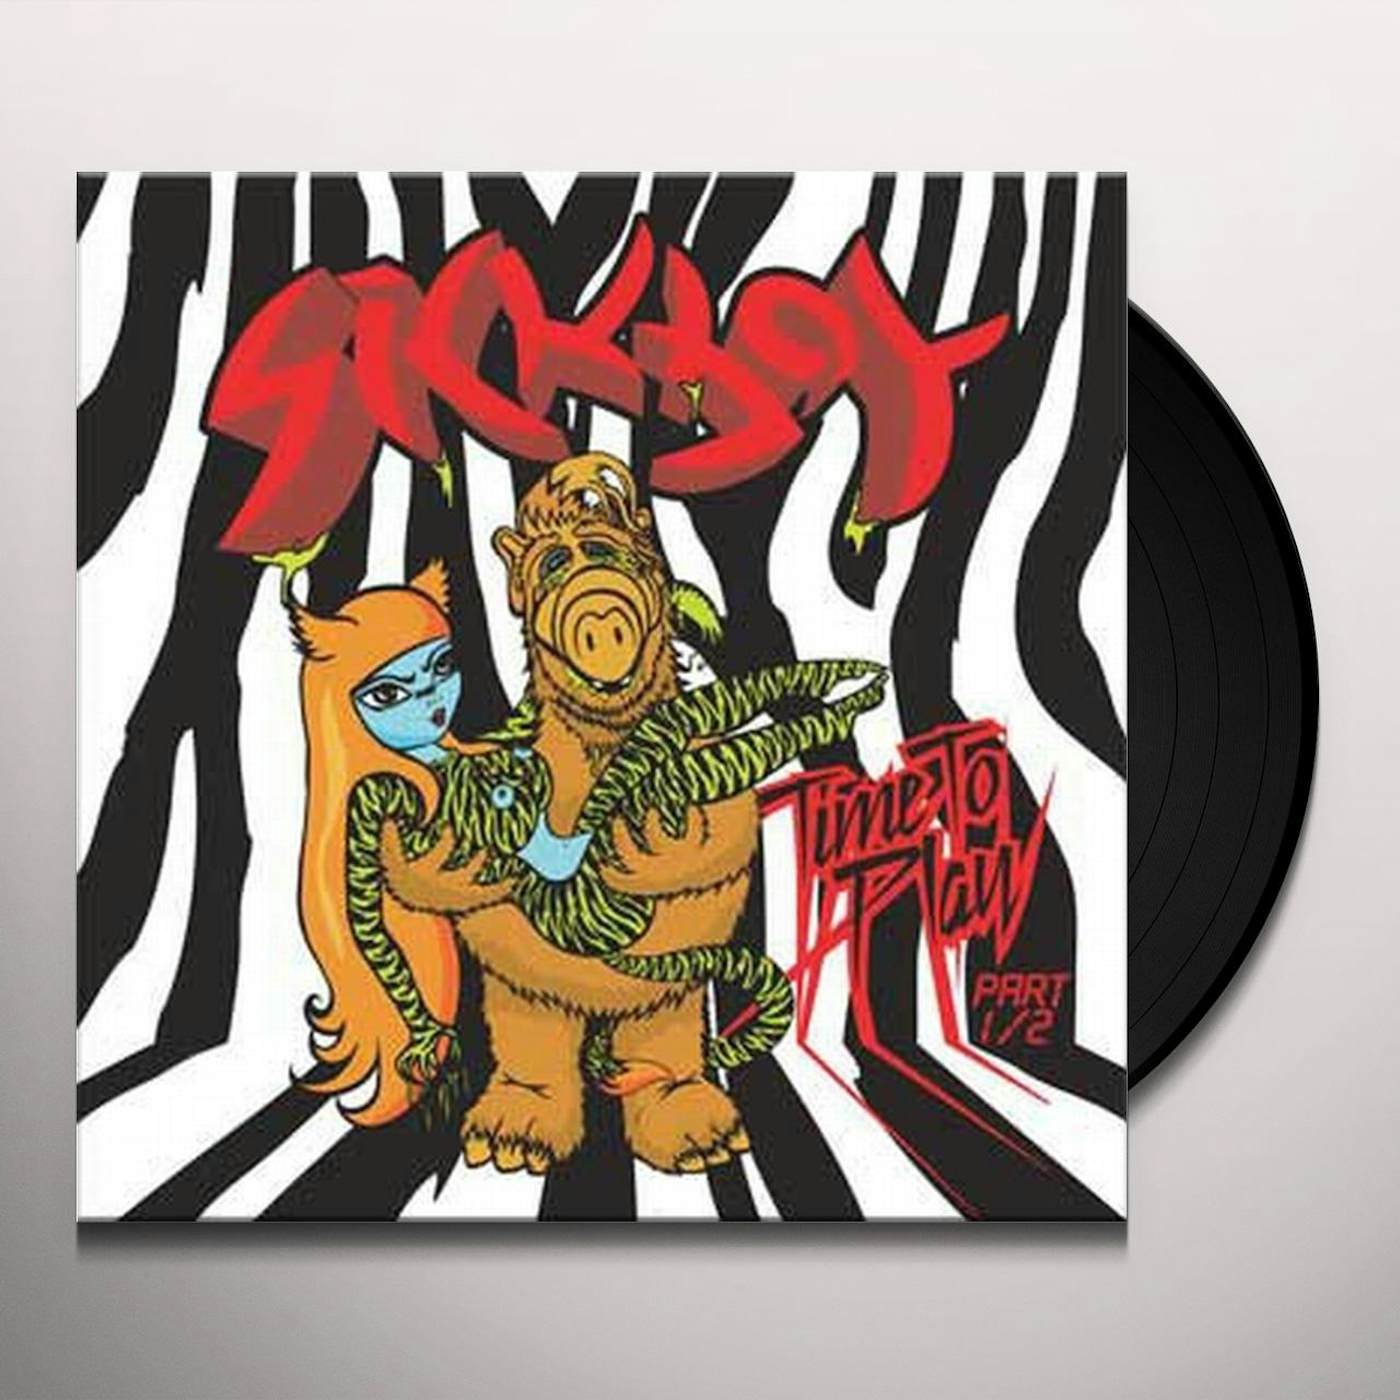 Sickboy TIME TO PLAY 1 Vinyl Record